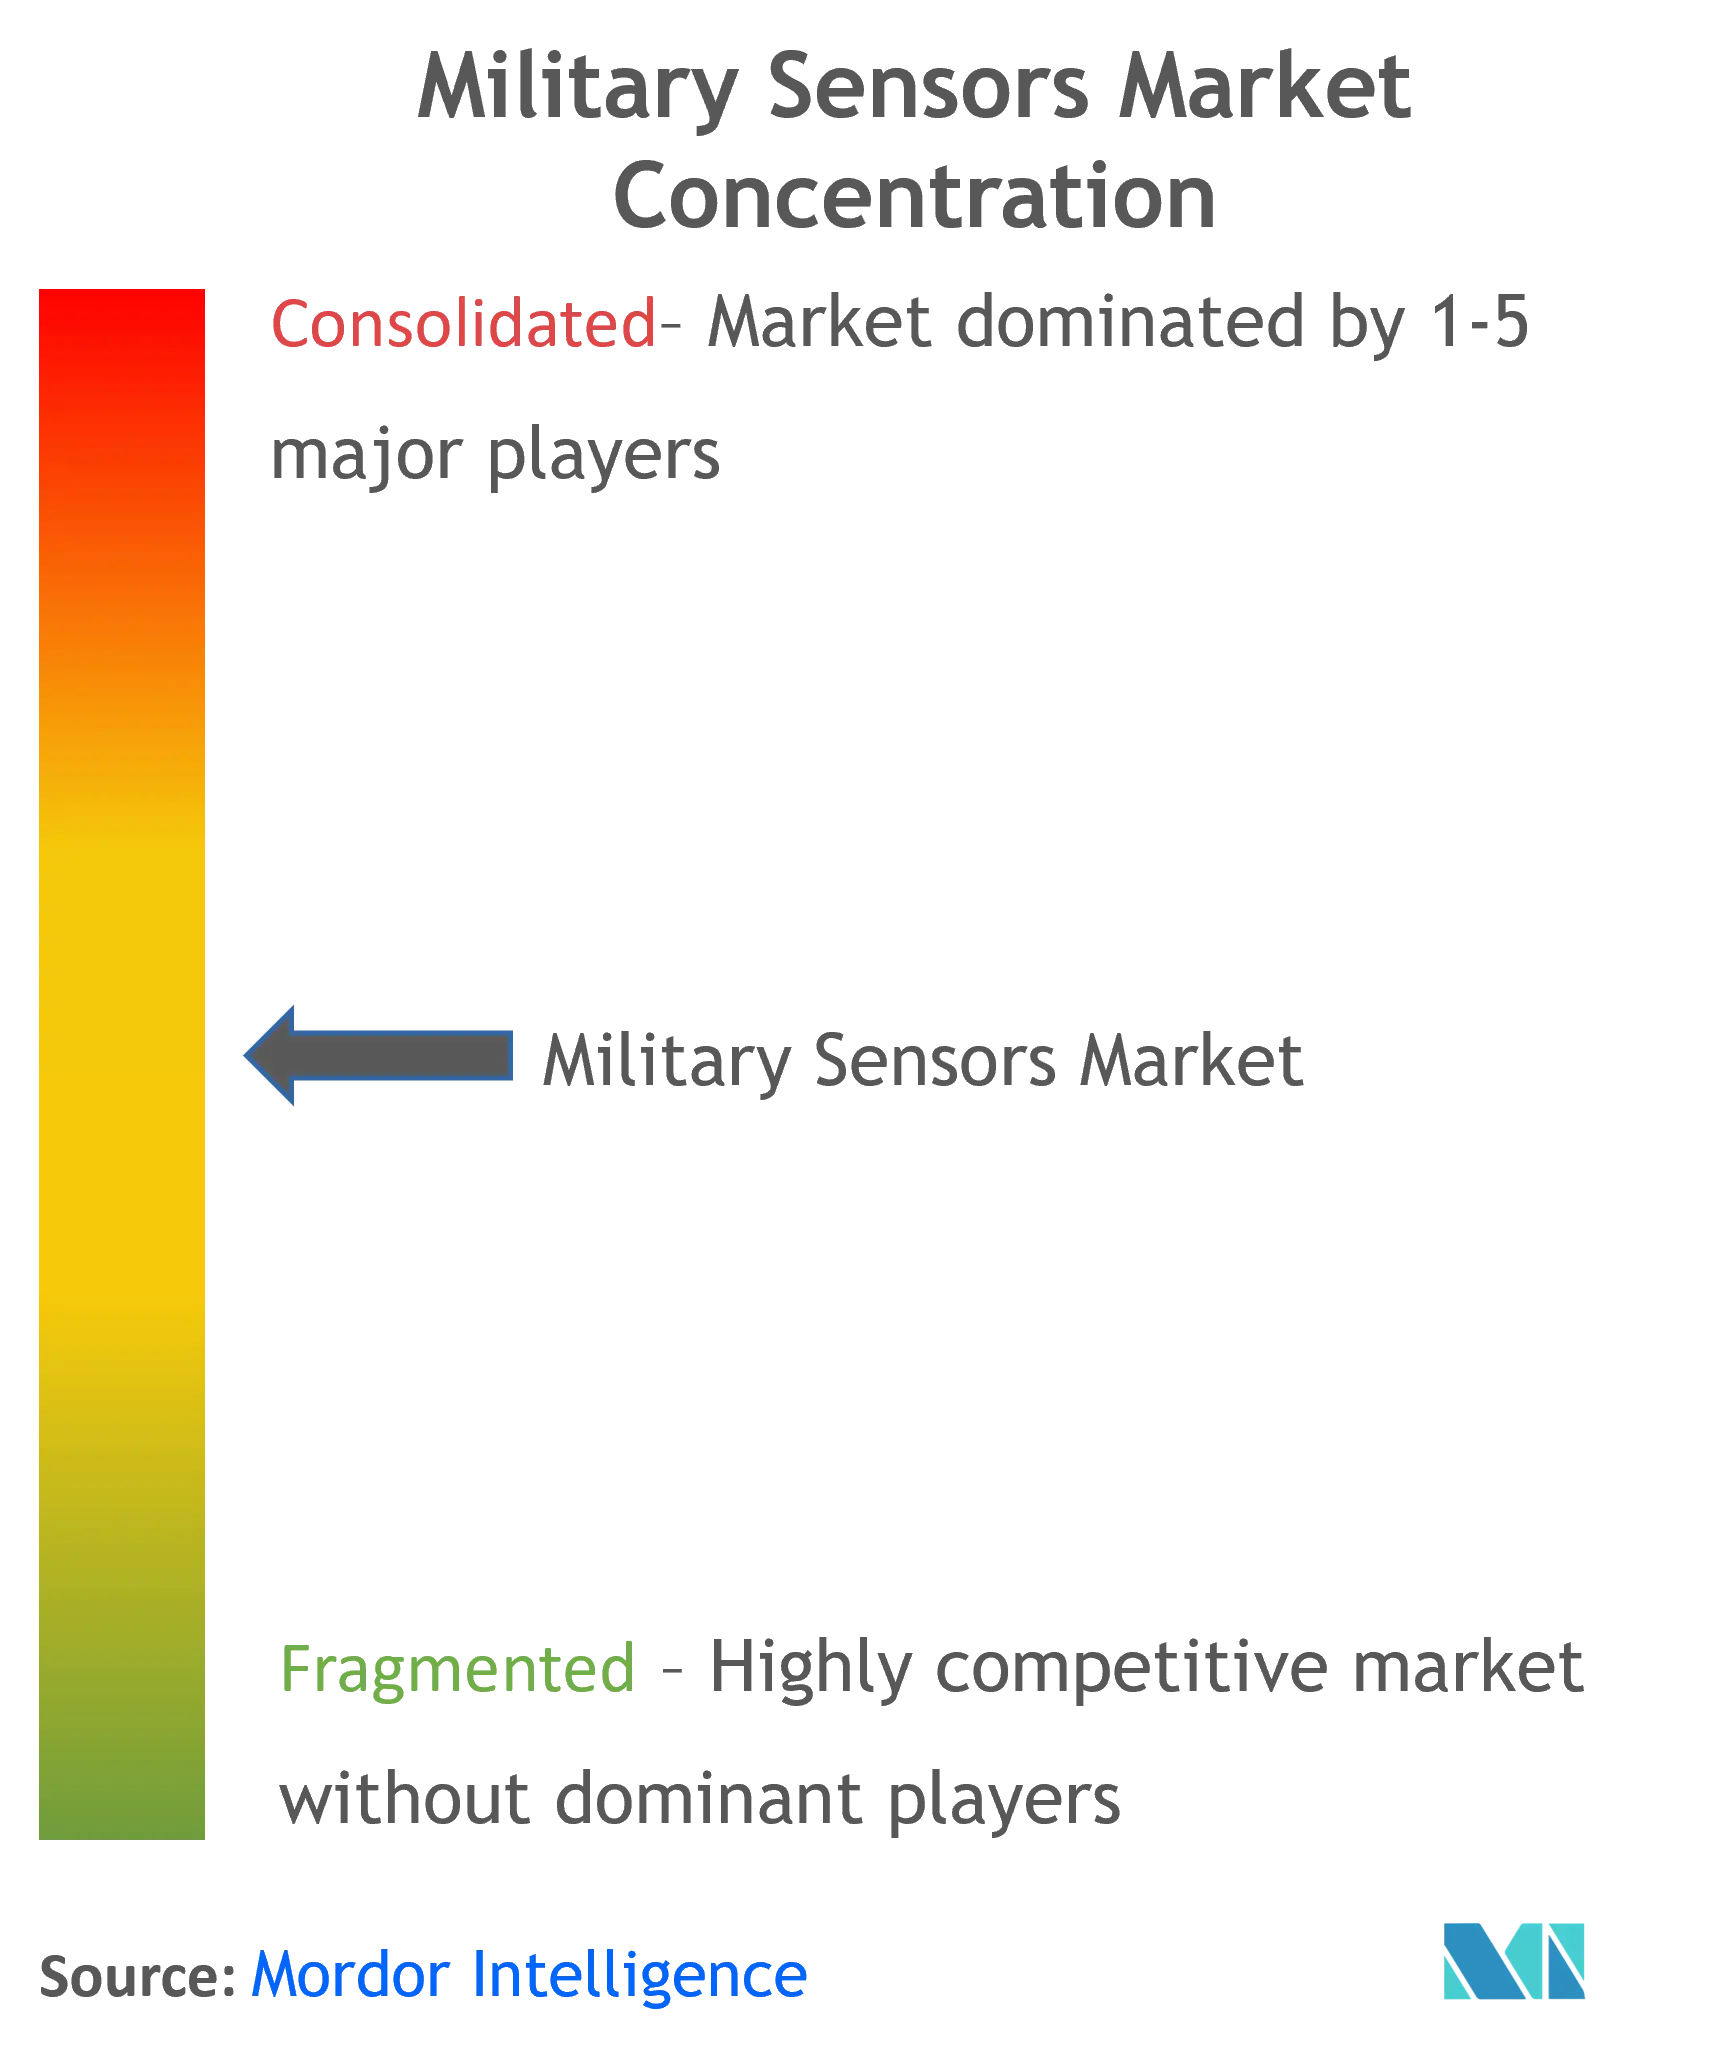 Military Sensors Market Concentration